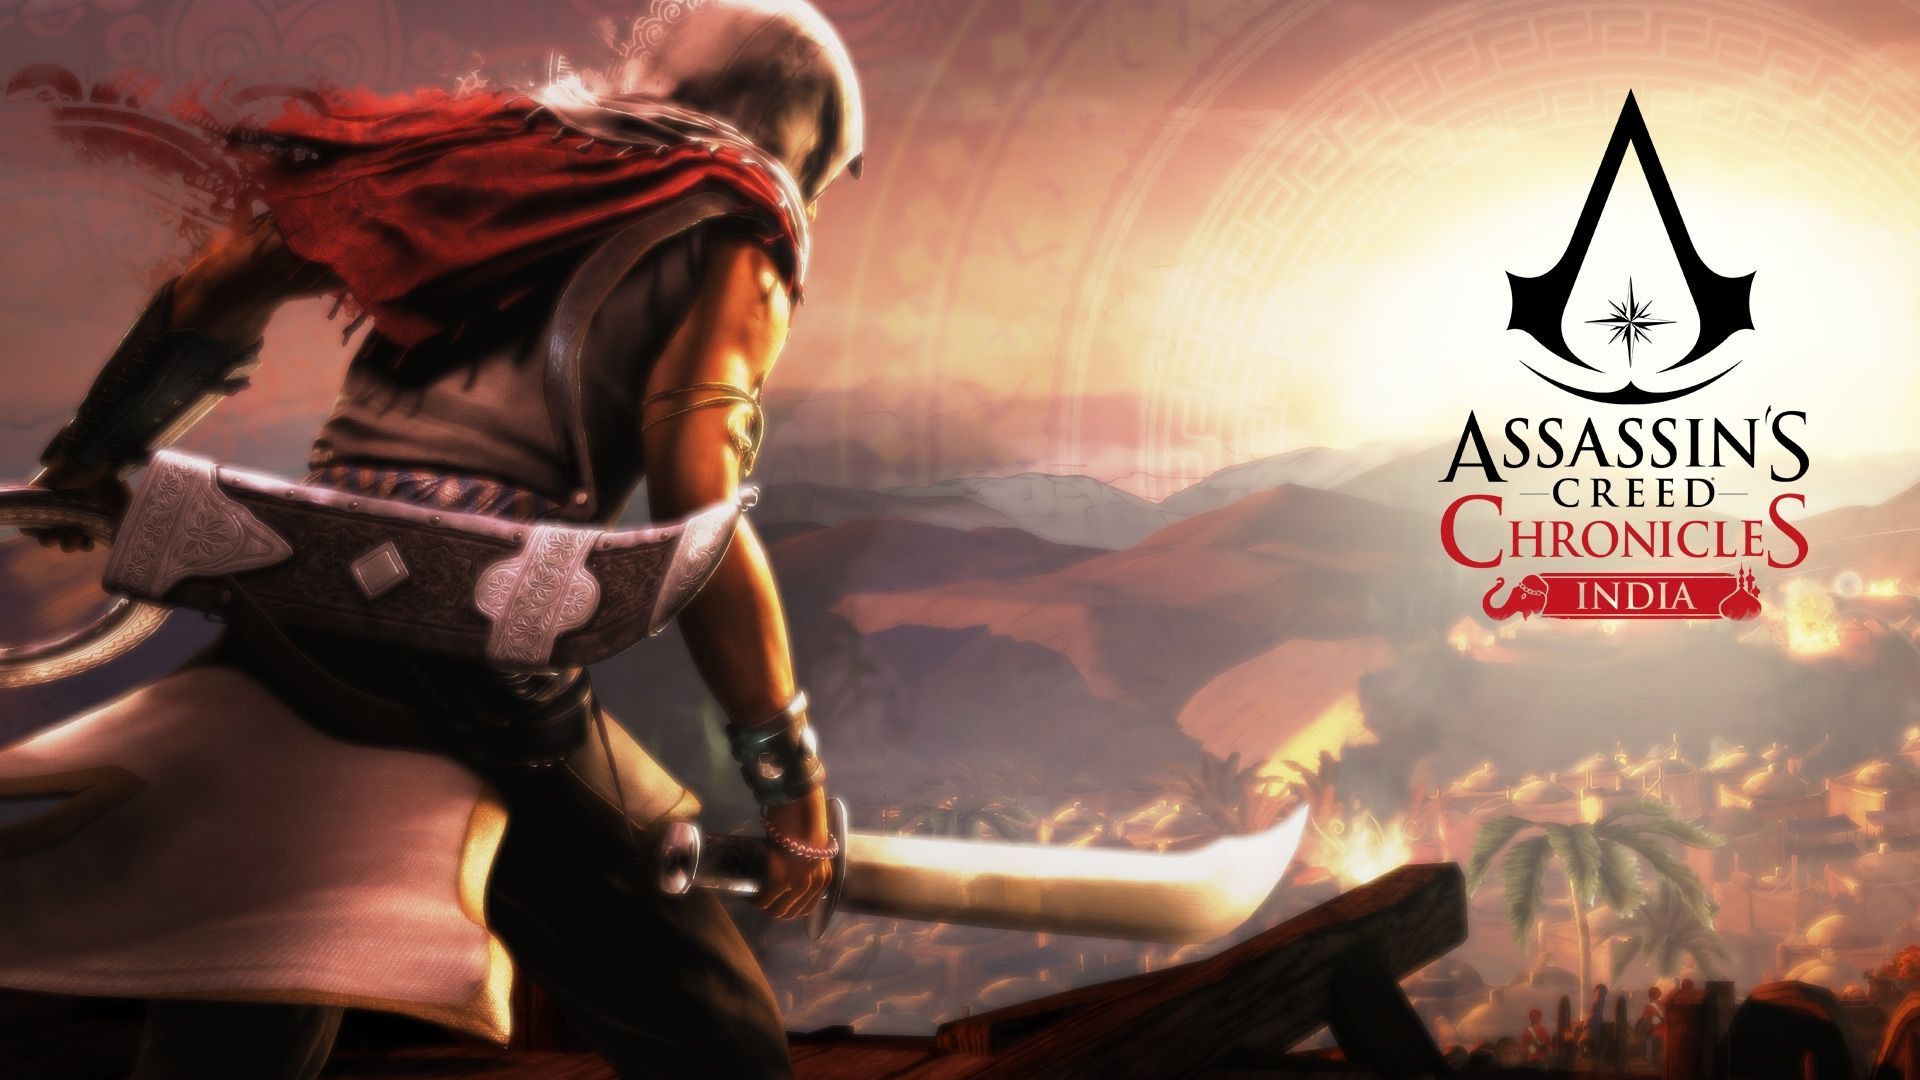 Assassin's Creed India Wallpaper. Assassin's creed chronicles, Assassins creed, Assassins creed syndicate